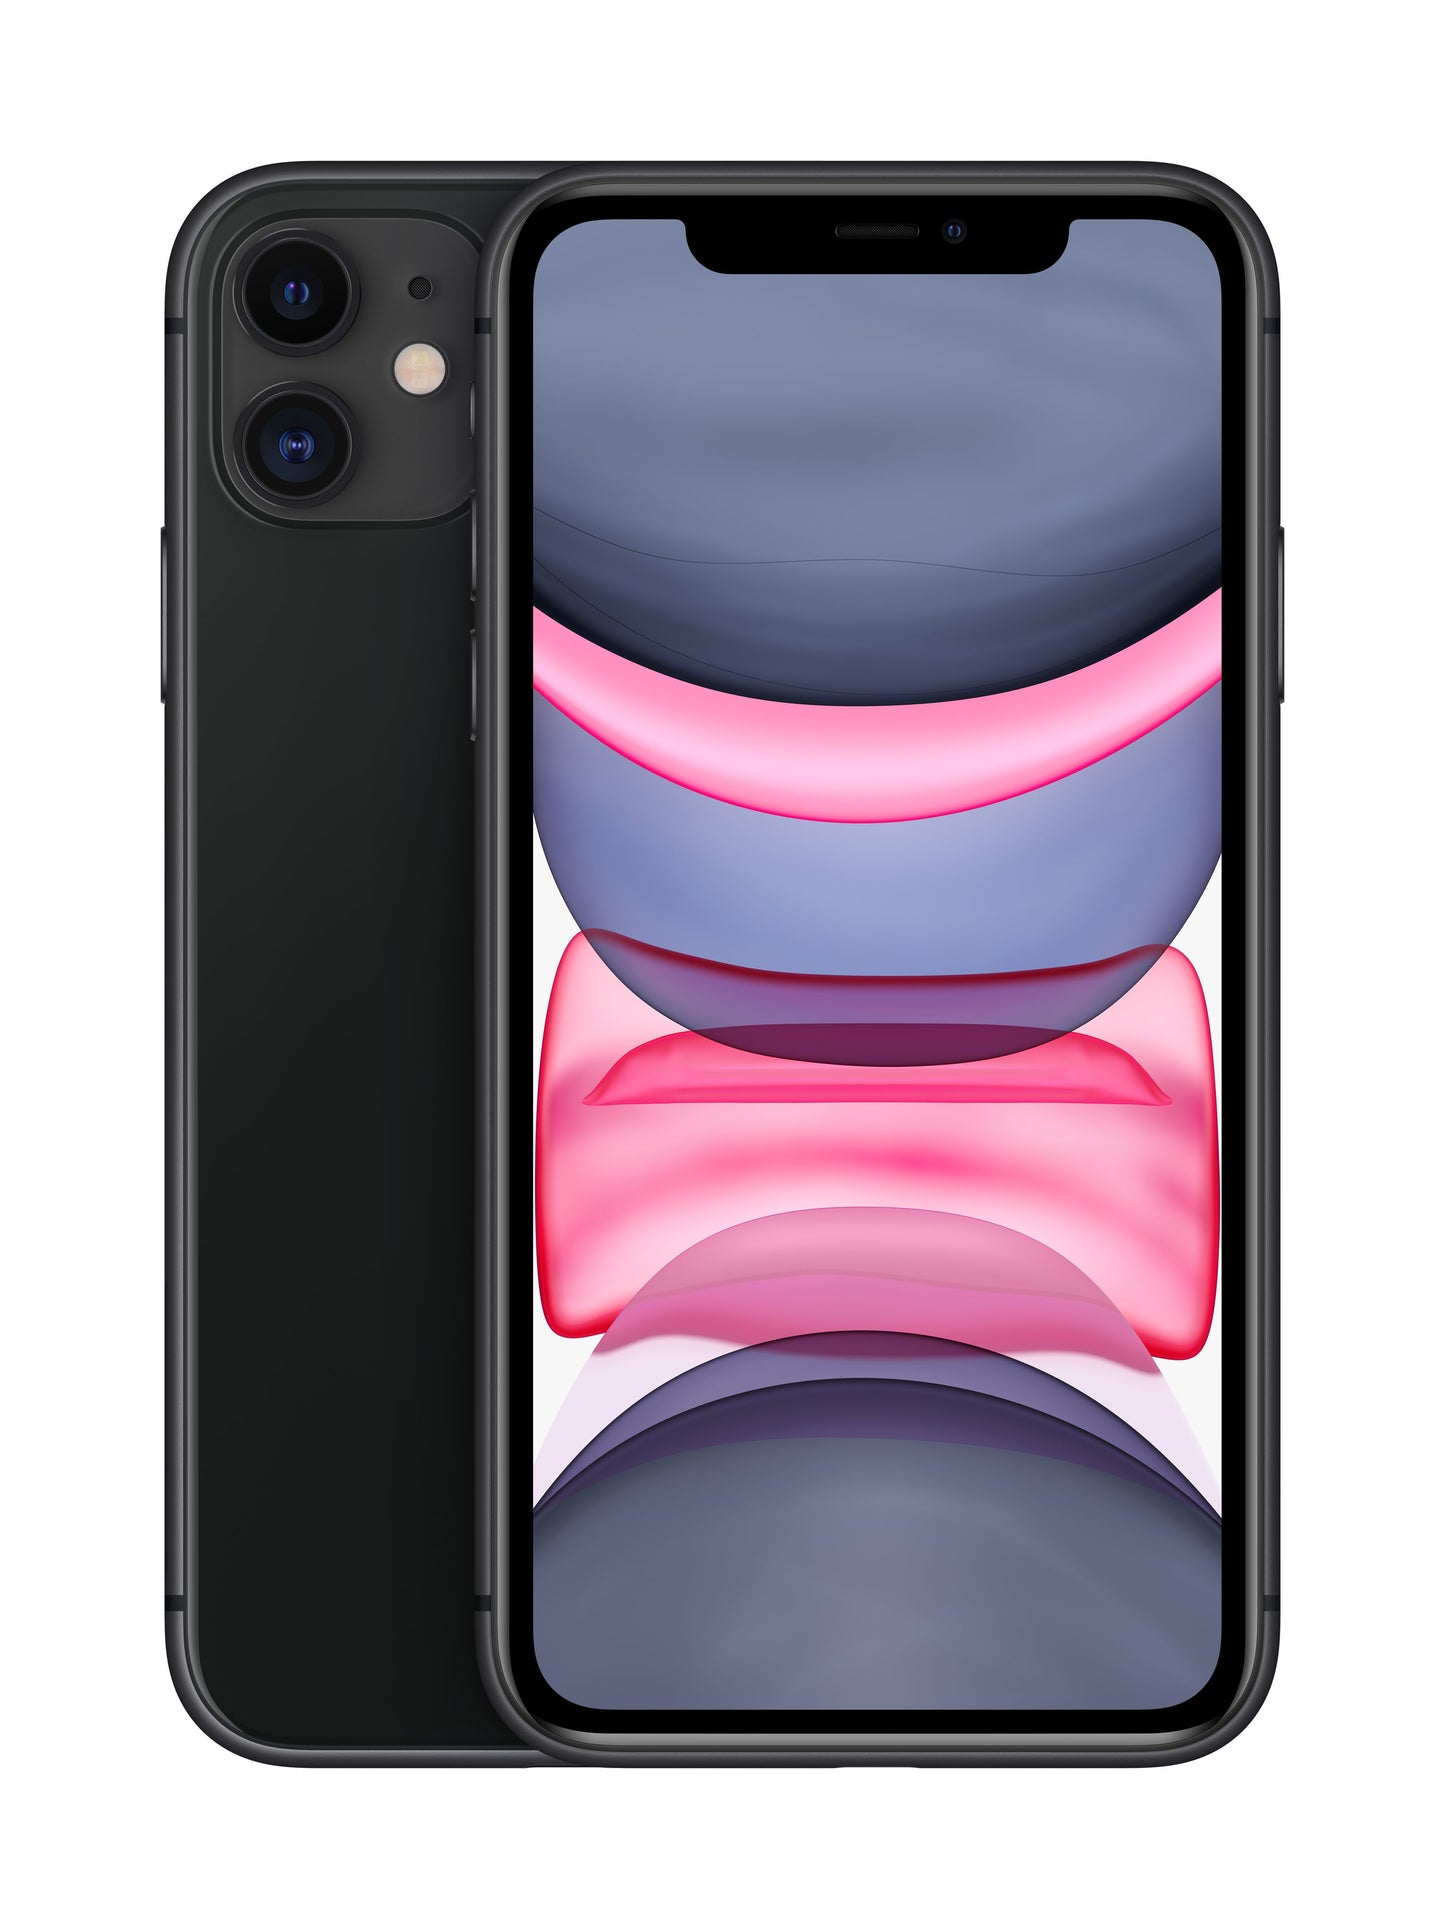 Apple iPhone 11 Refurbished – Excellent Grade - Black - Front and Back